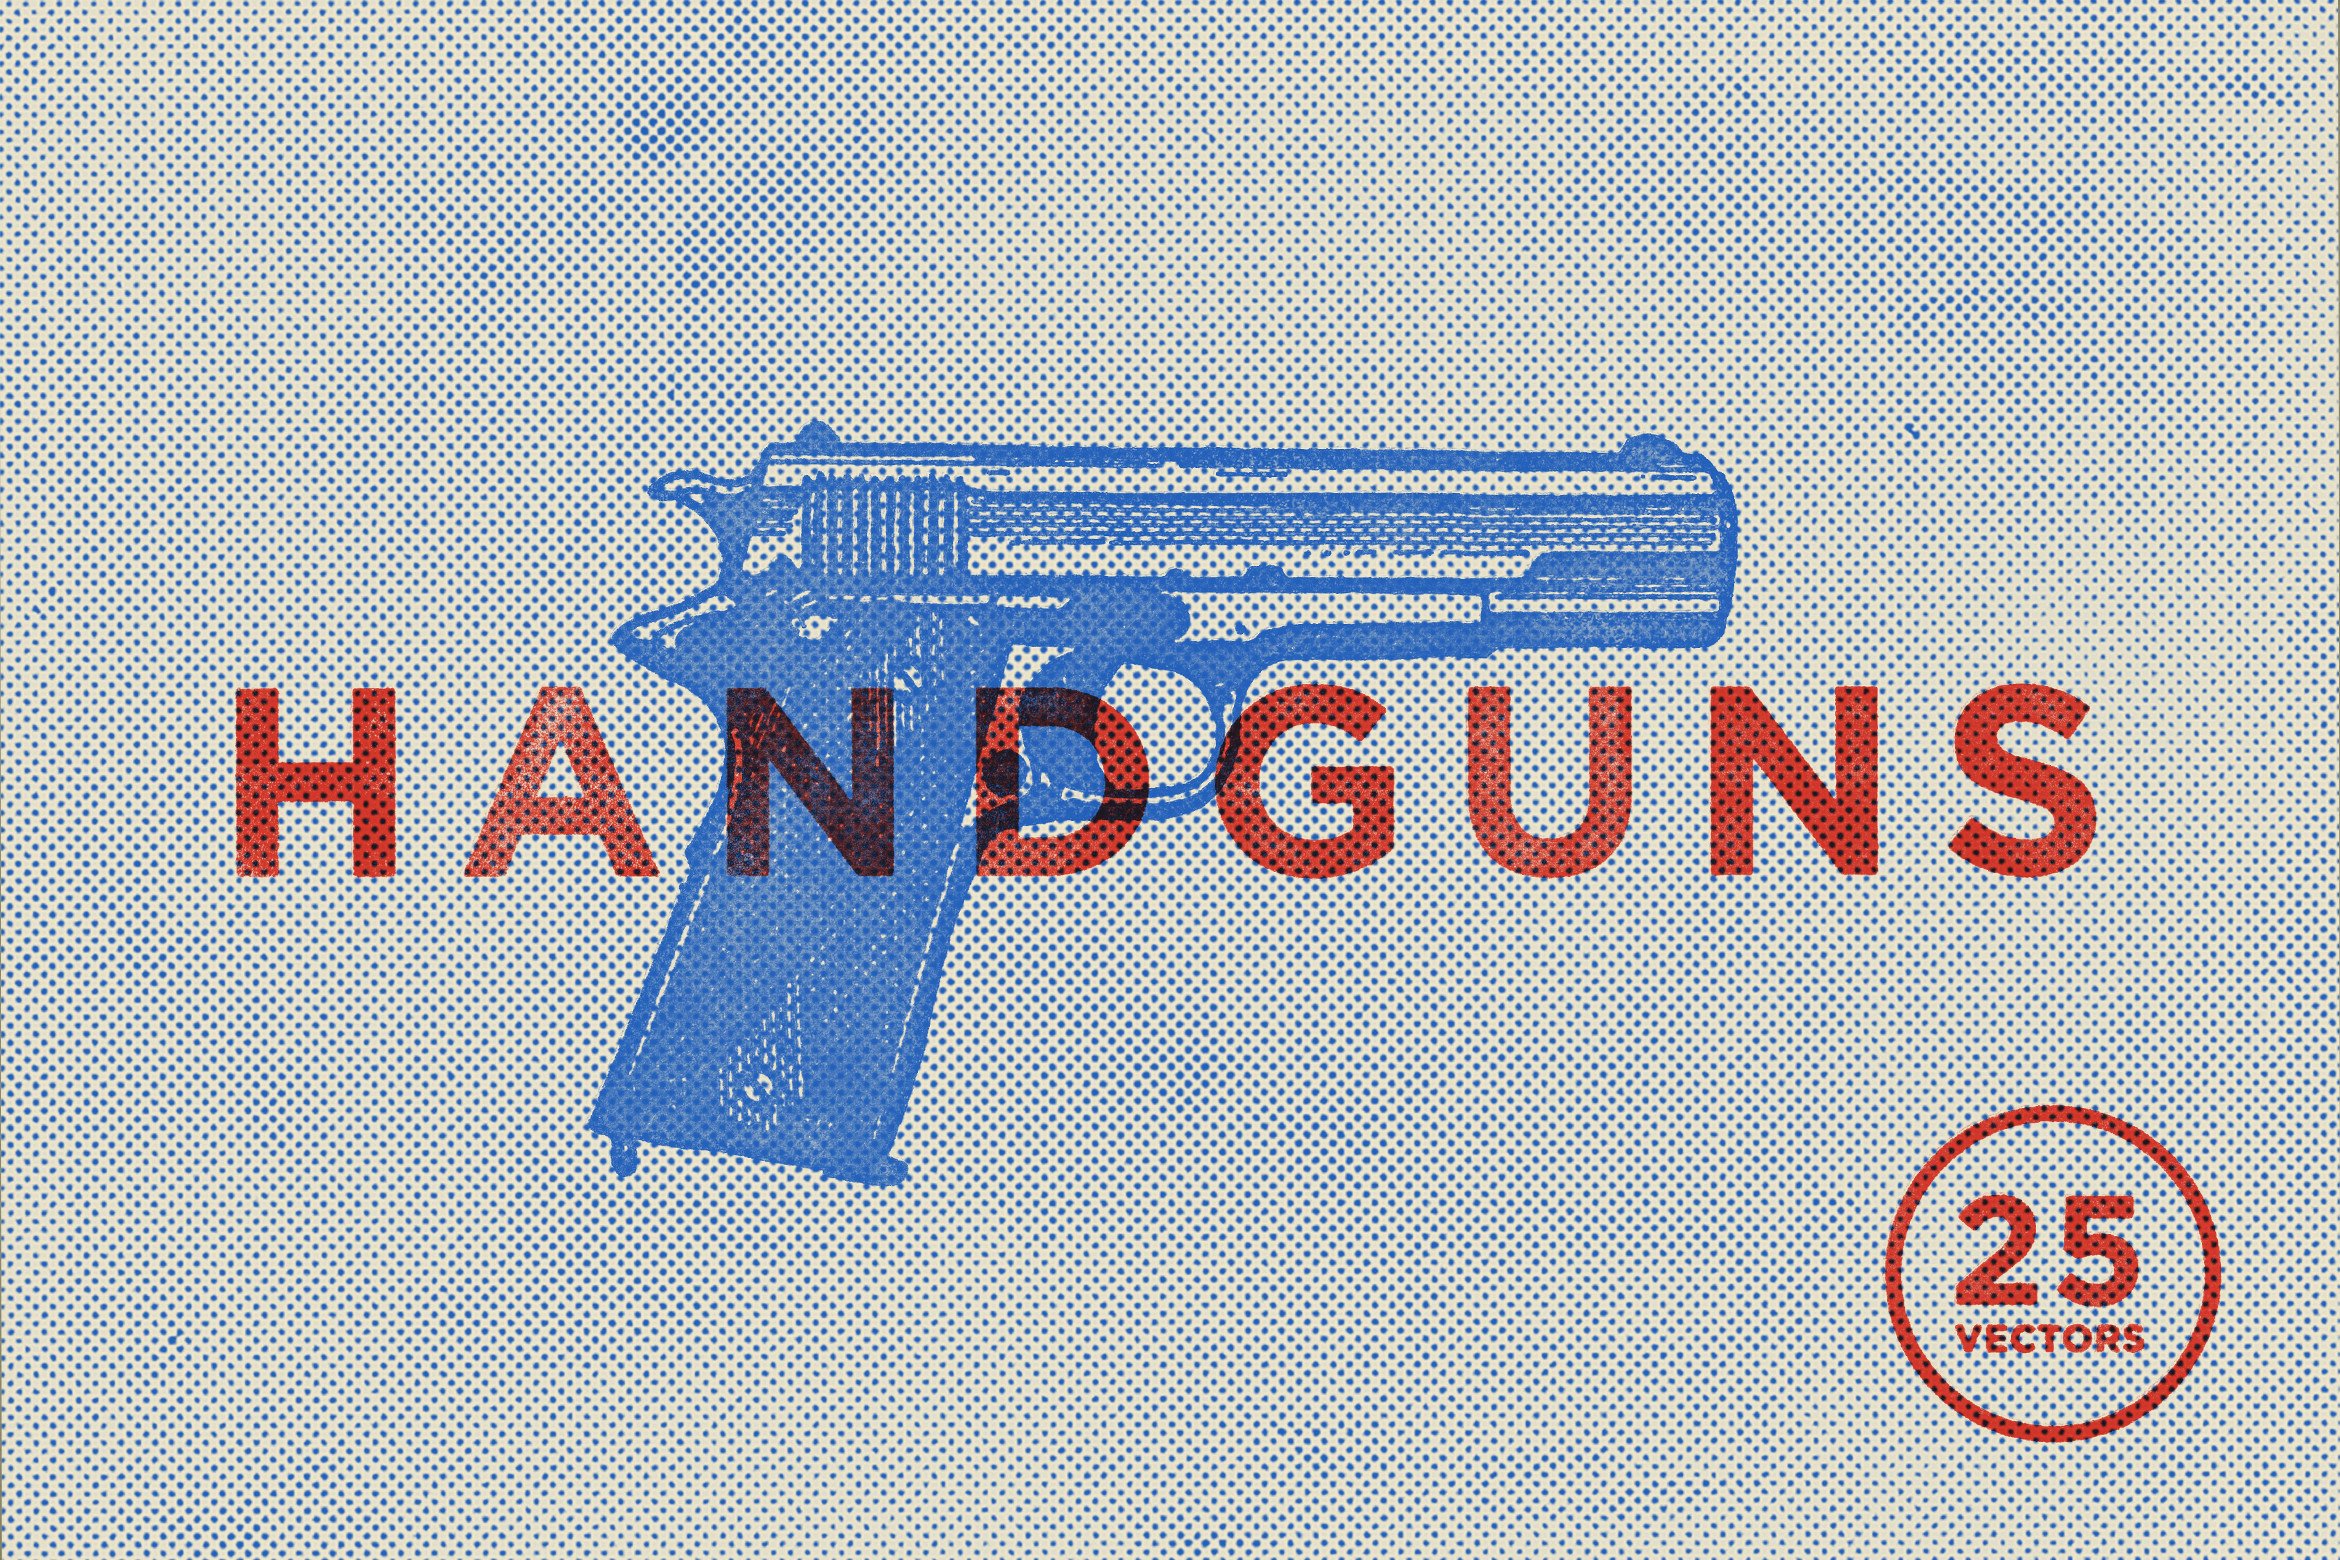 Handguns: EPS Vector Illustrations cover image.